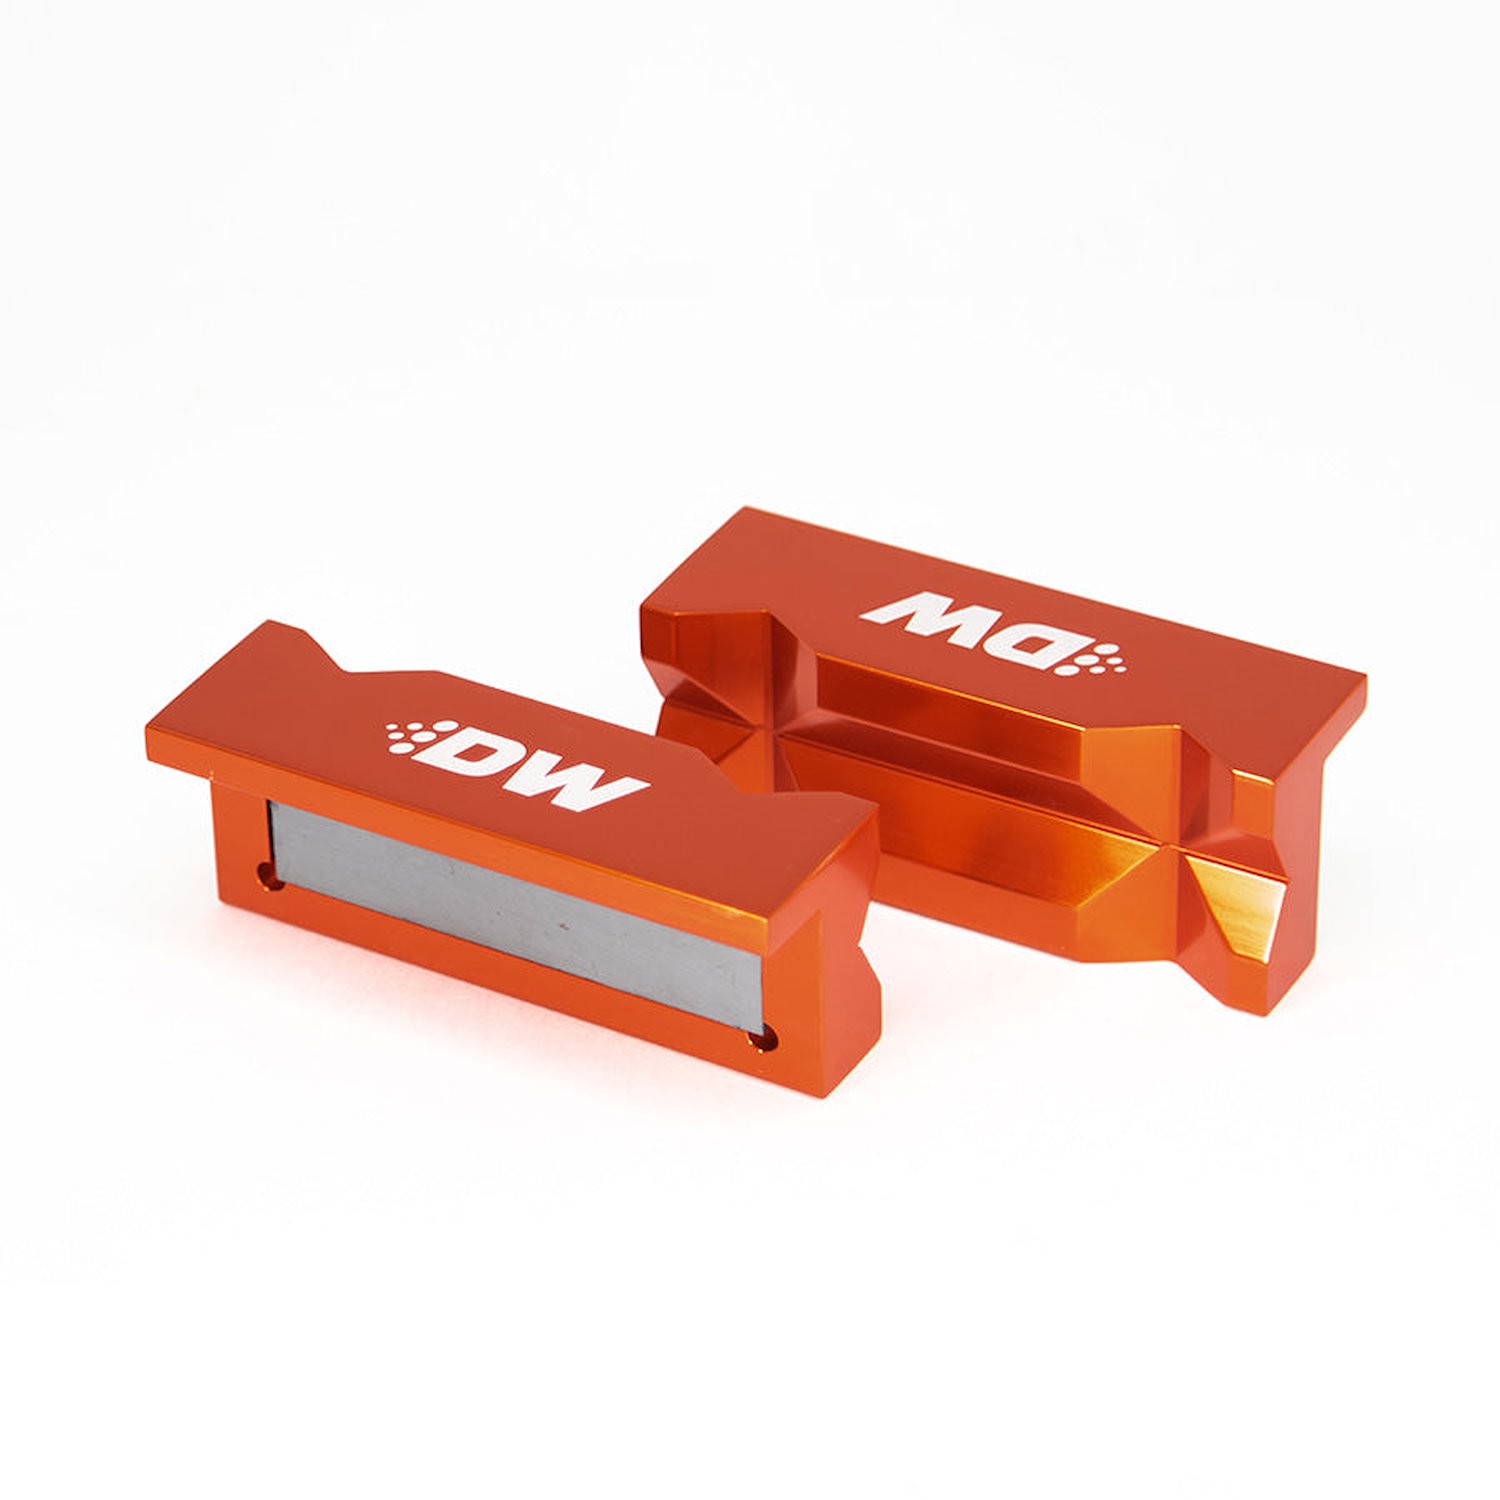 6021007 4" Aluminum Soft Jaws with Magnet (orange anodized)T6061 Aluminum